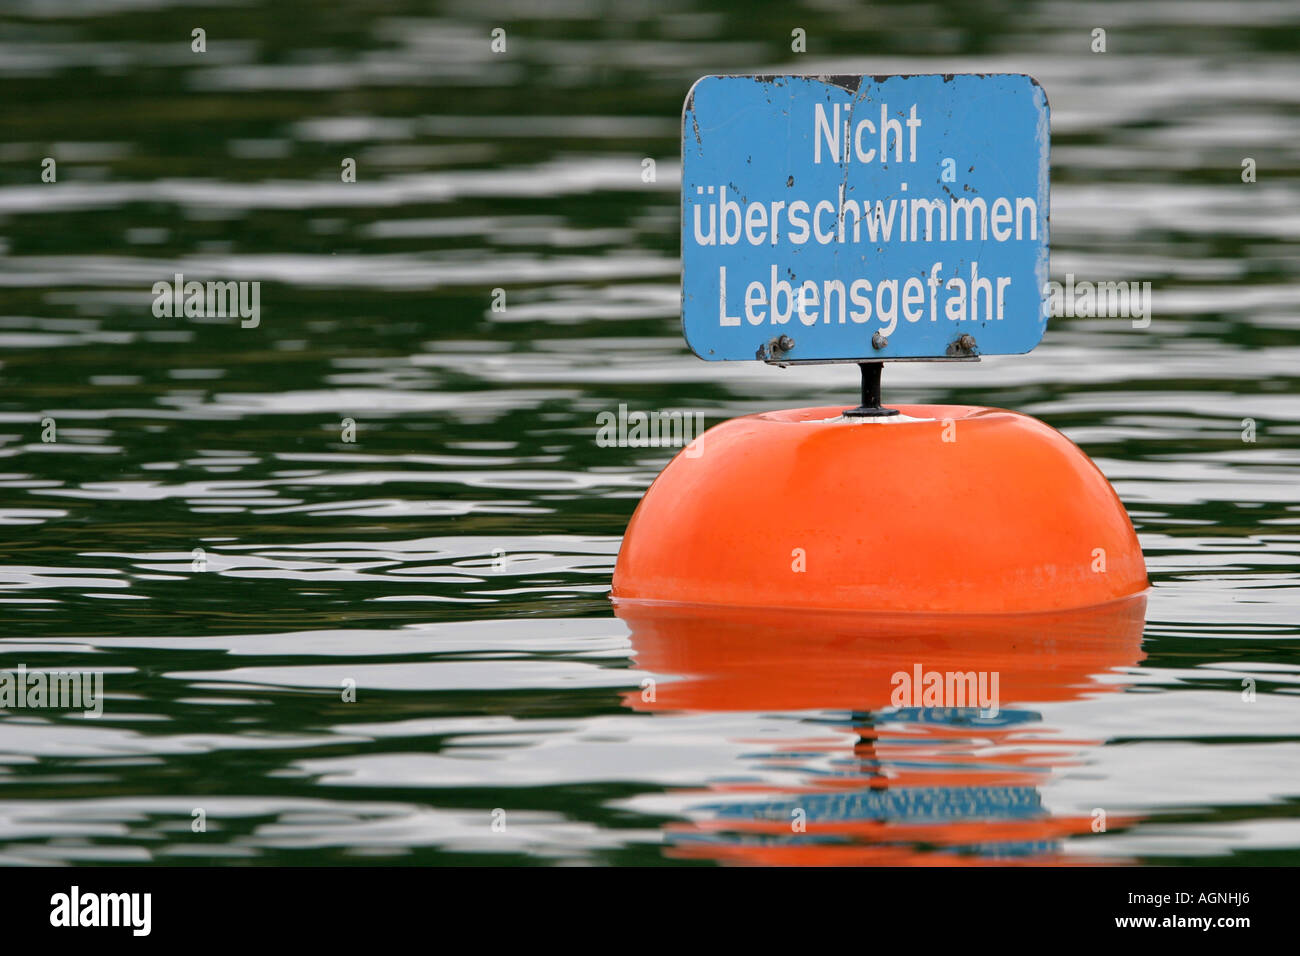 Oberschleissheim, GER, 08. July 2006 - A buoy warns of dangerous swimming. Stock Photo